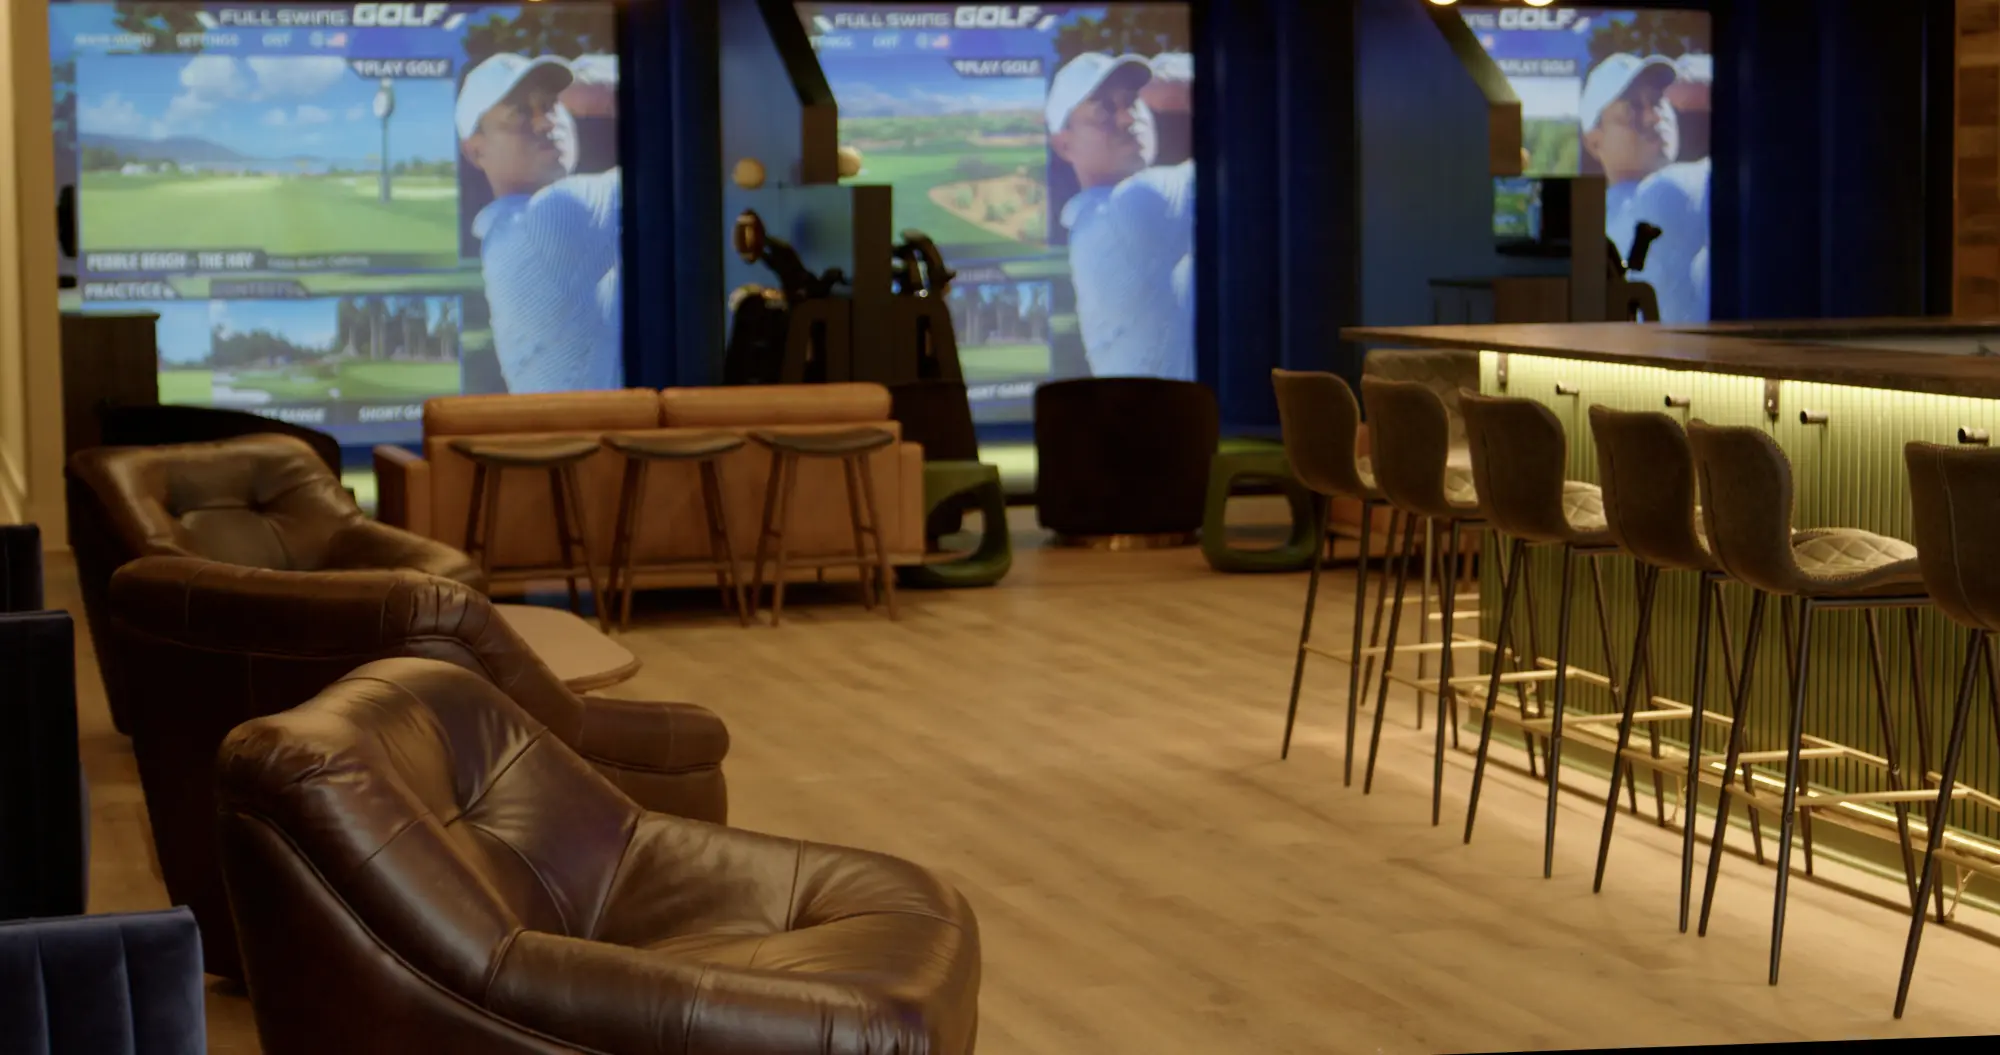 Clubhouse - Sports bar in Greensboro - Golf Simulators